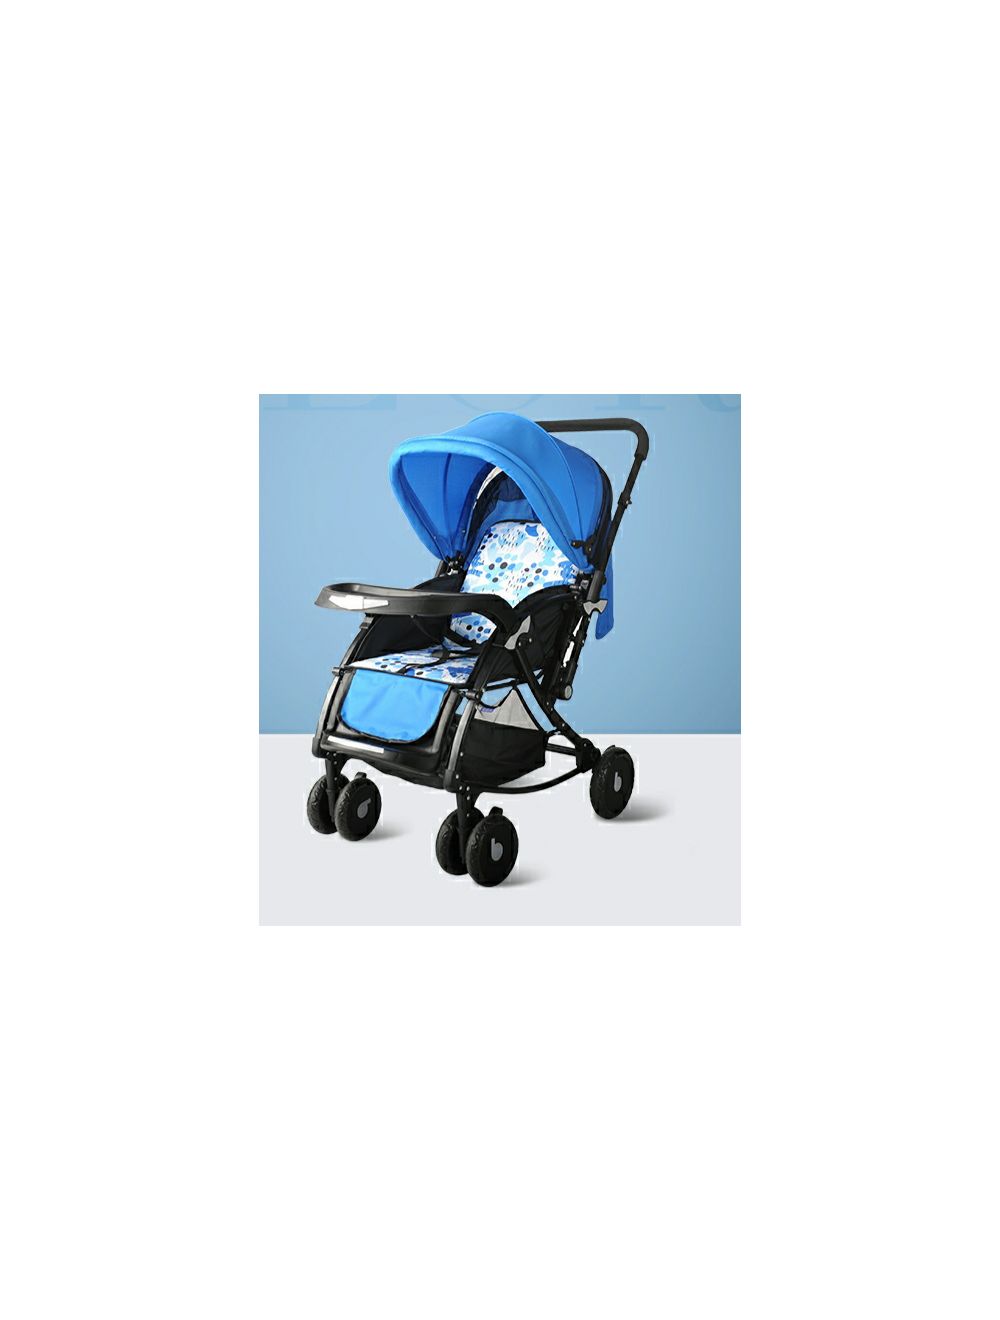 Joymaker Baby Stroller Blue